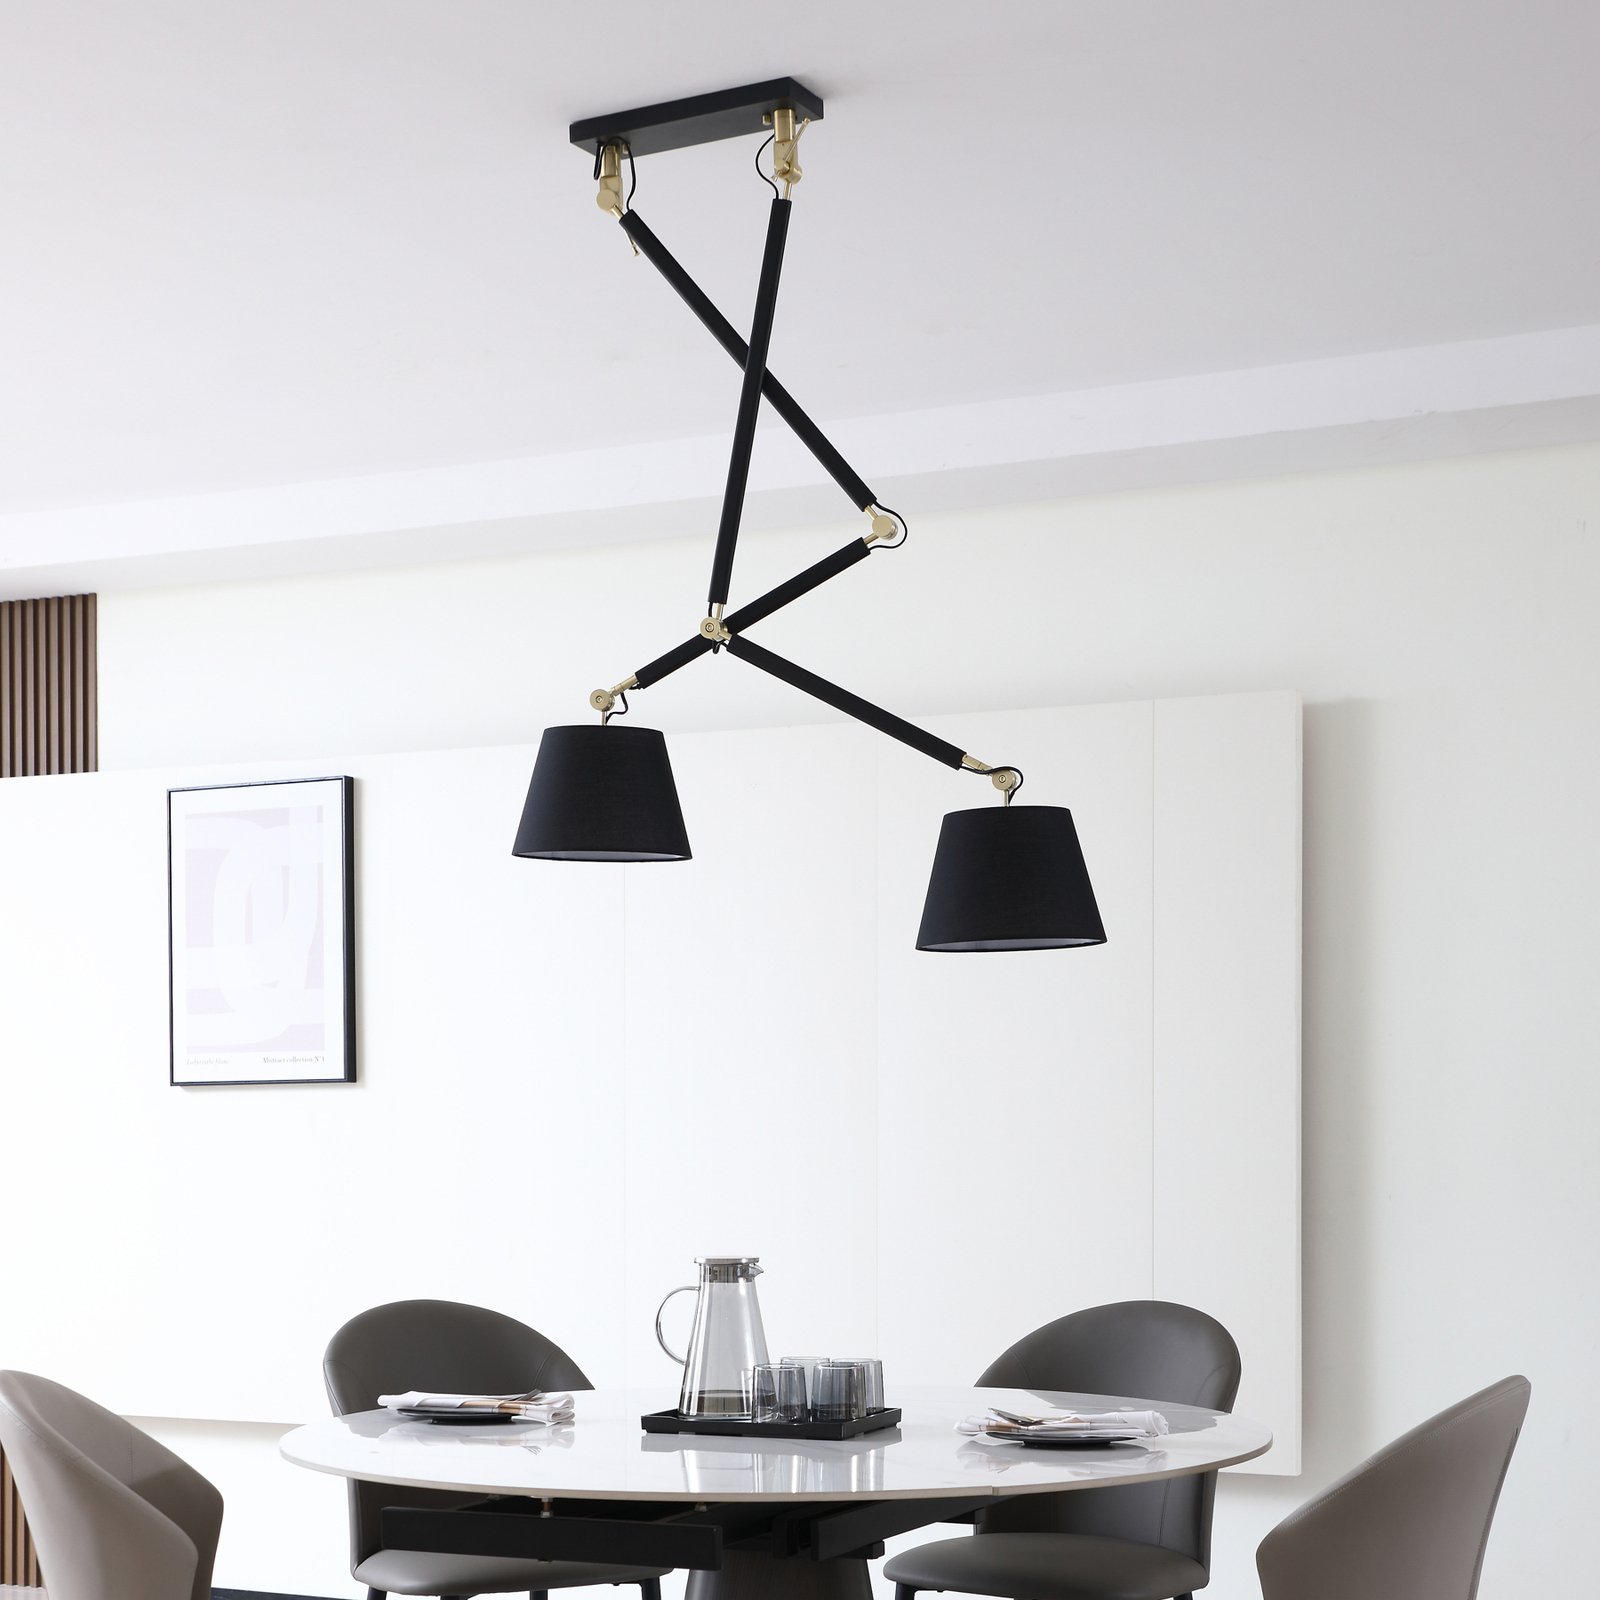 Lucande ceiling lamp Marvaine black/gold-coloured, adjustable